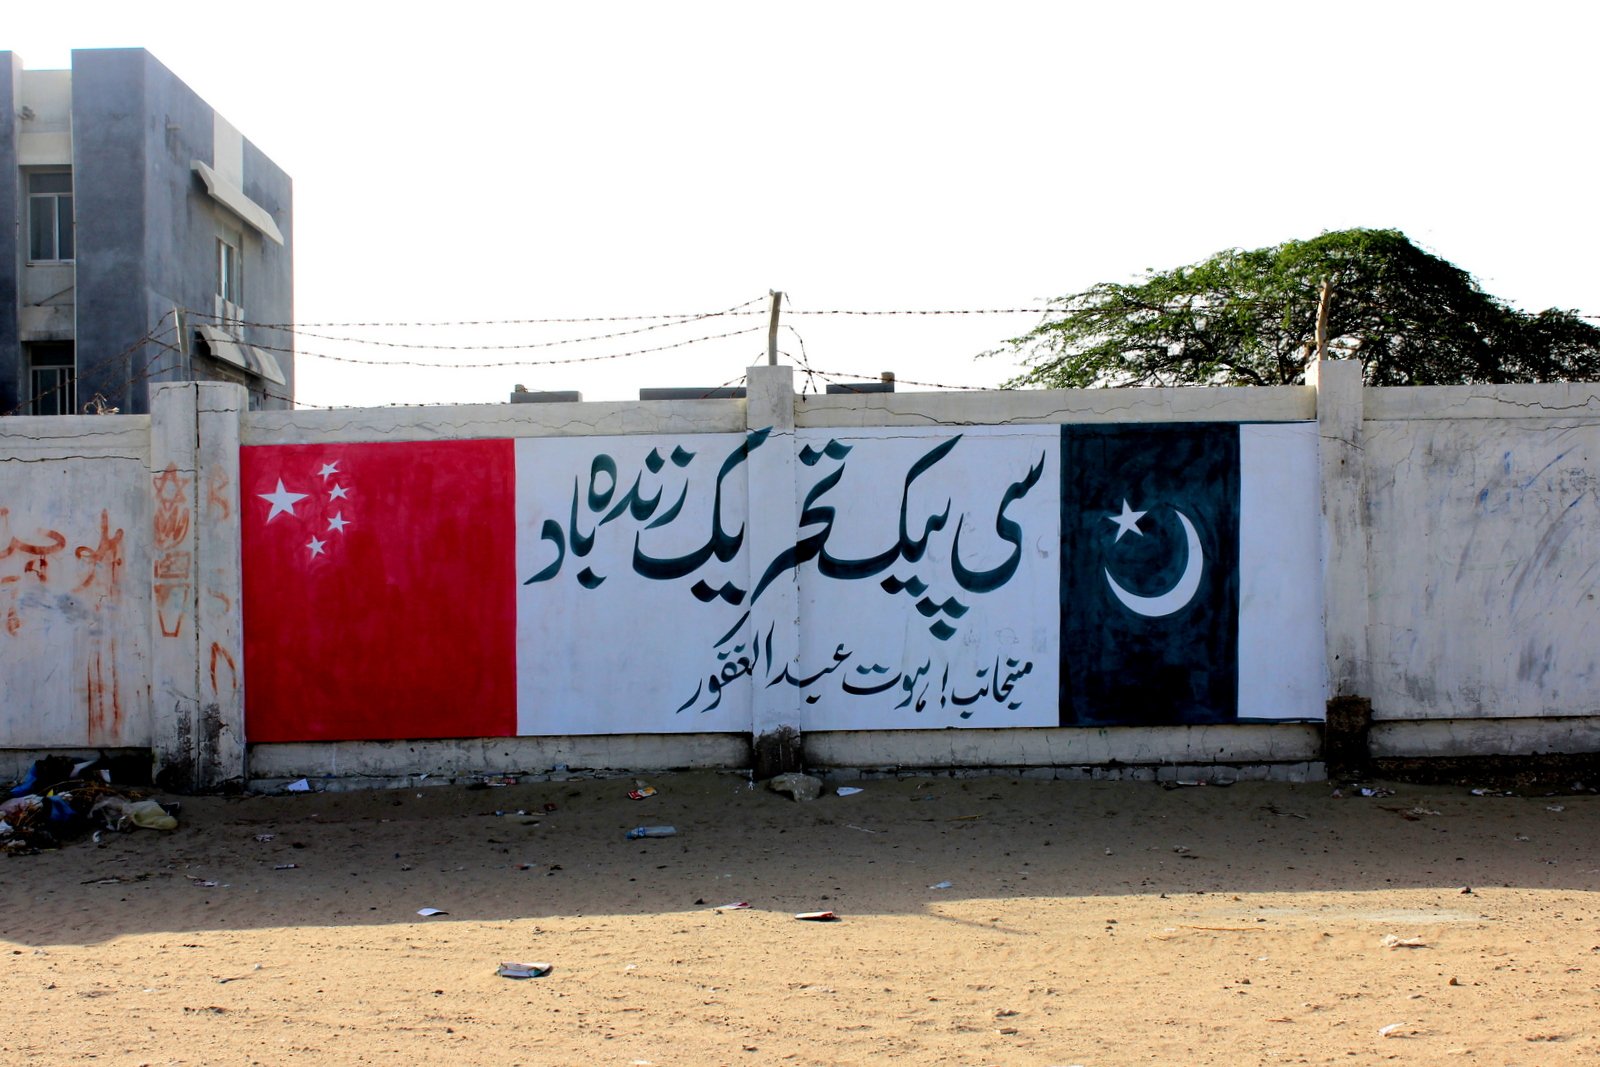 <p>Graffiti celebrates CPEC on the walls of Pakistan [image by: Zofeen T Ebrahim]</p>